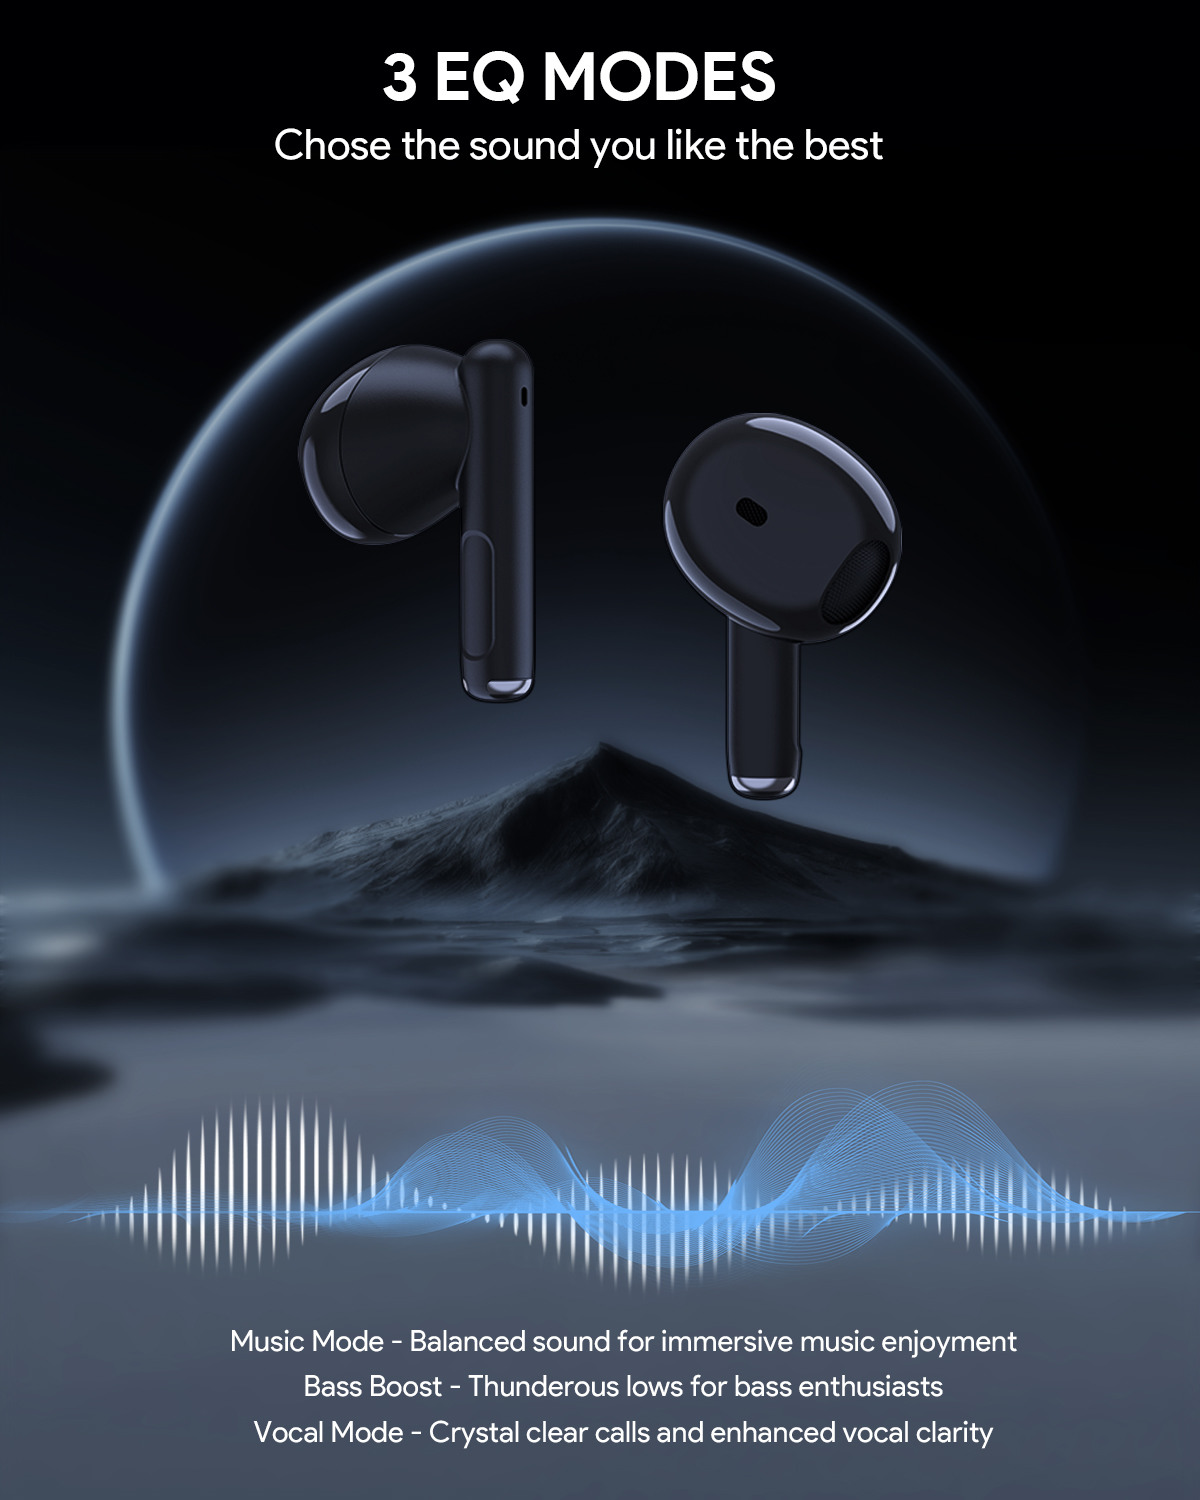 AUKEY Portable True Wirel. Earbuds EP-M2 Black